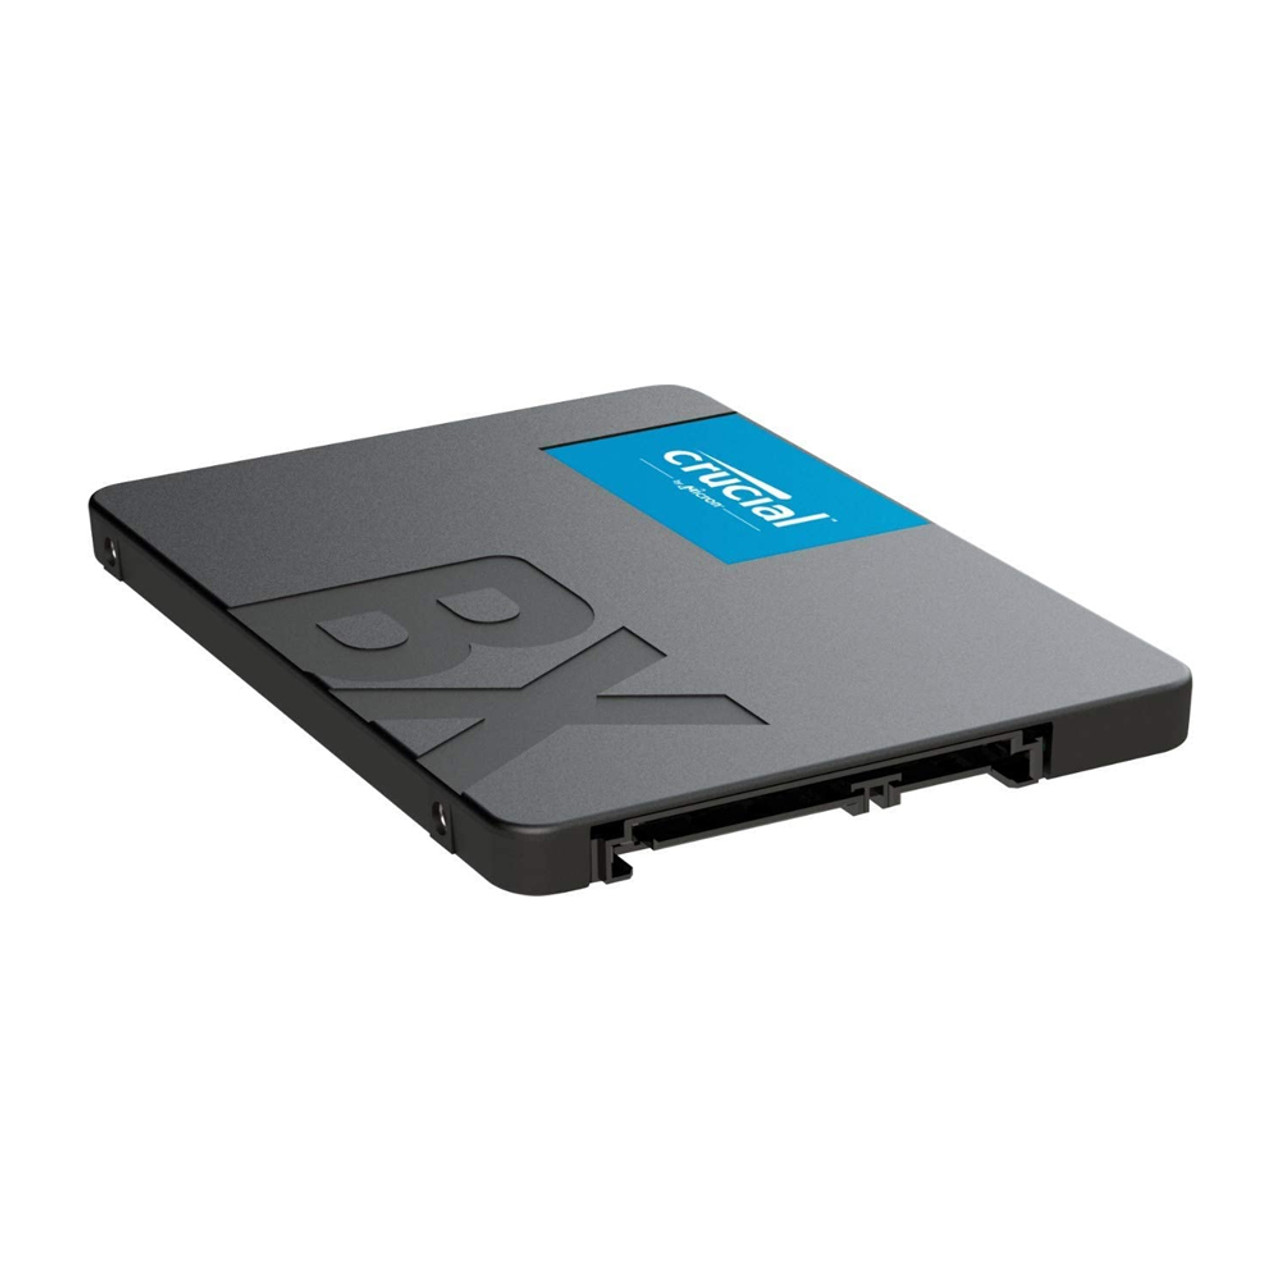 Crucial CT2000BX500SSD1 BX500 2TB 3D NAND SATA 2.5-Inch Internal SSD